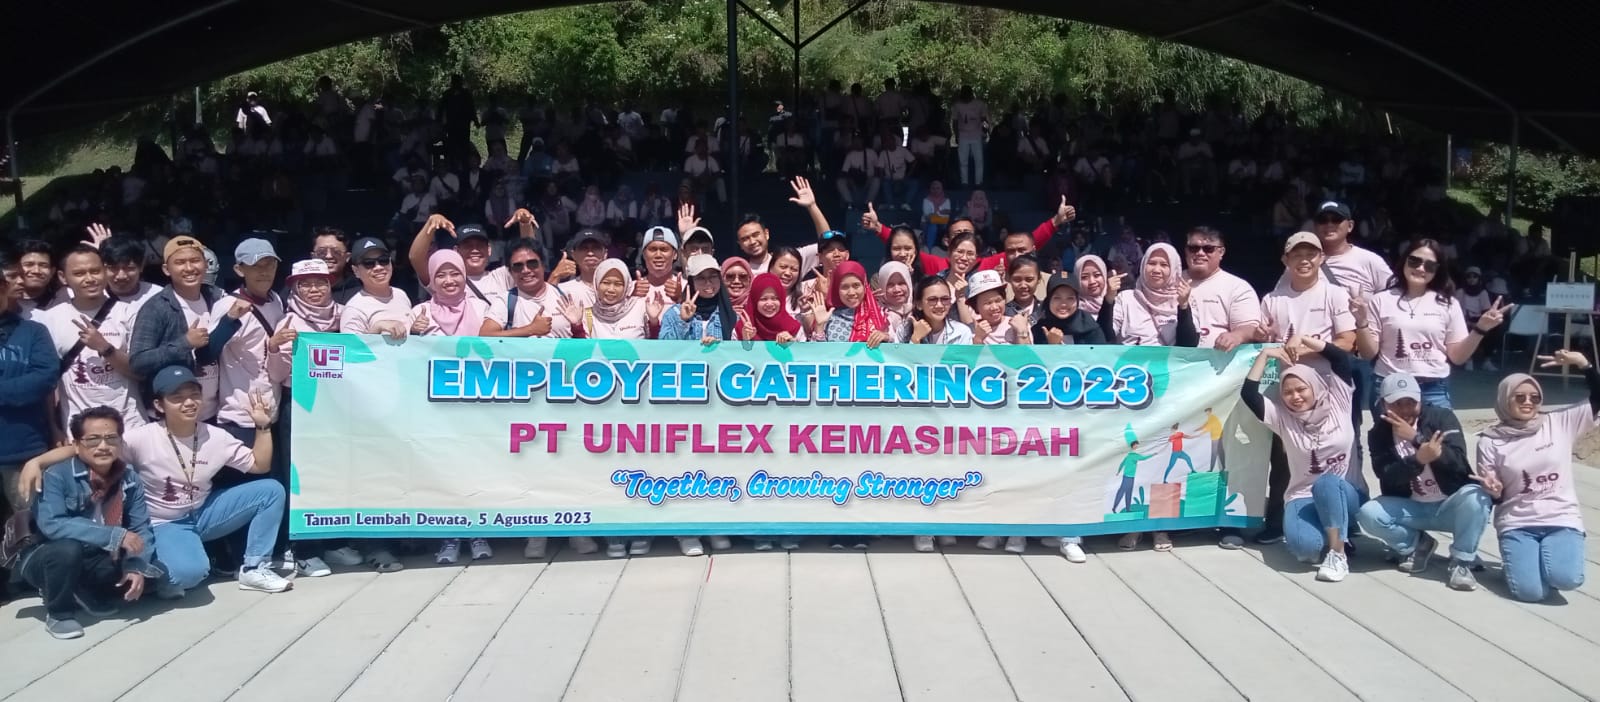 Taman Lembah Dewata Jadi Destinasi Employee Gathering PT UNIFLEX KEMASINDAH